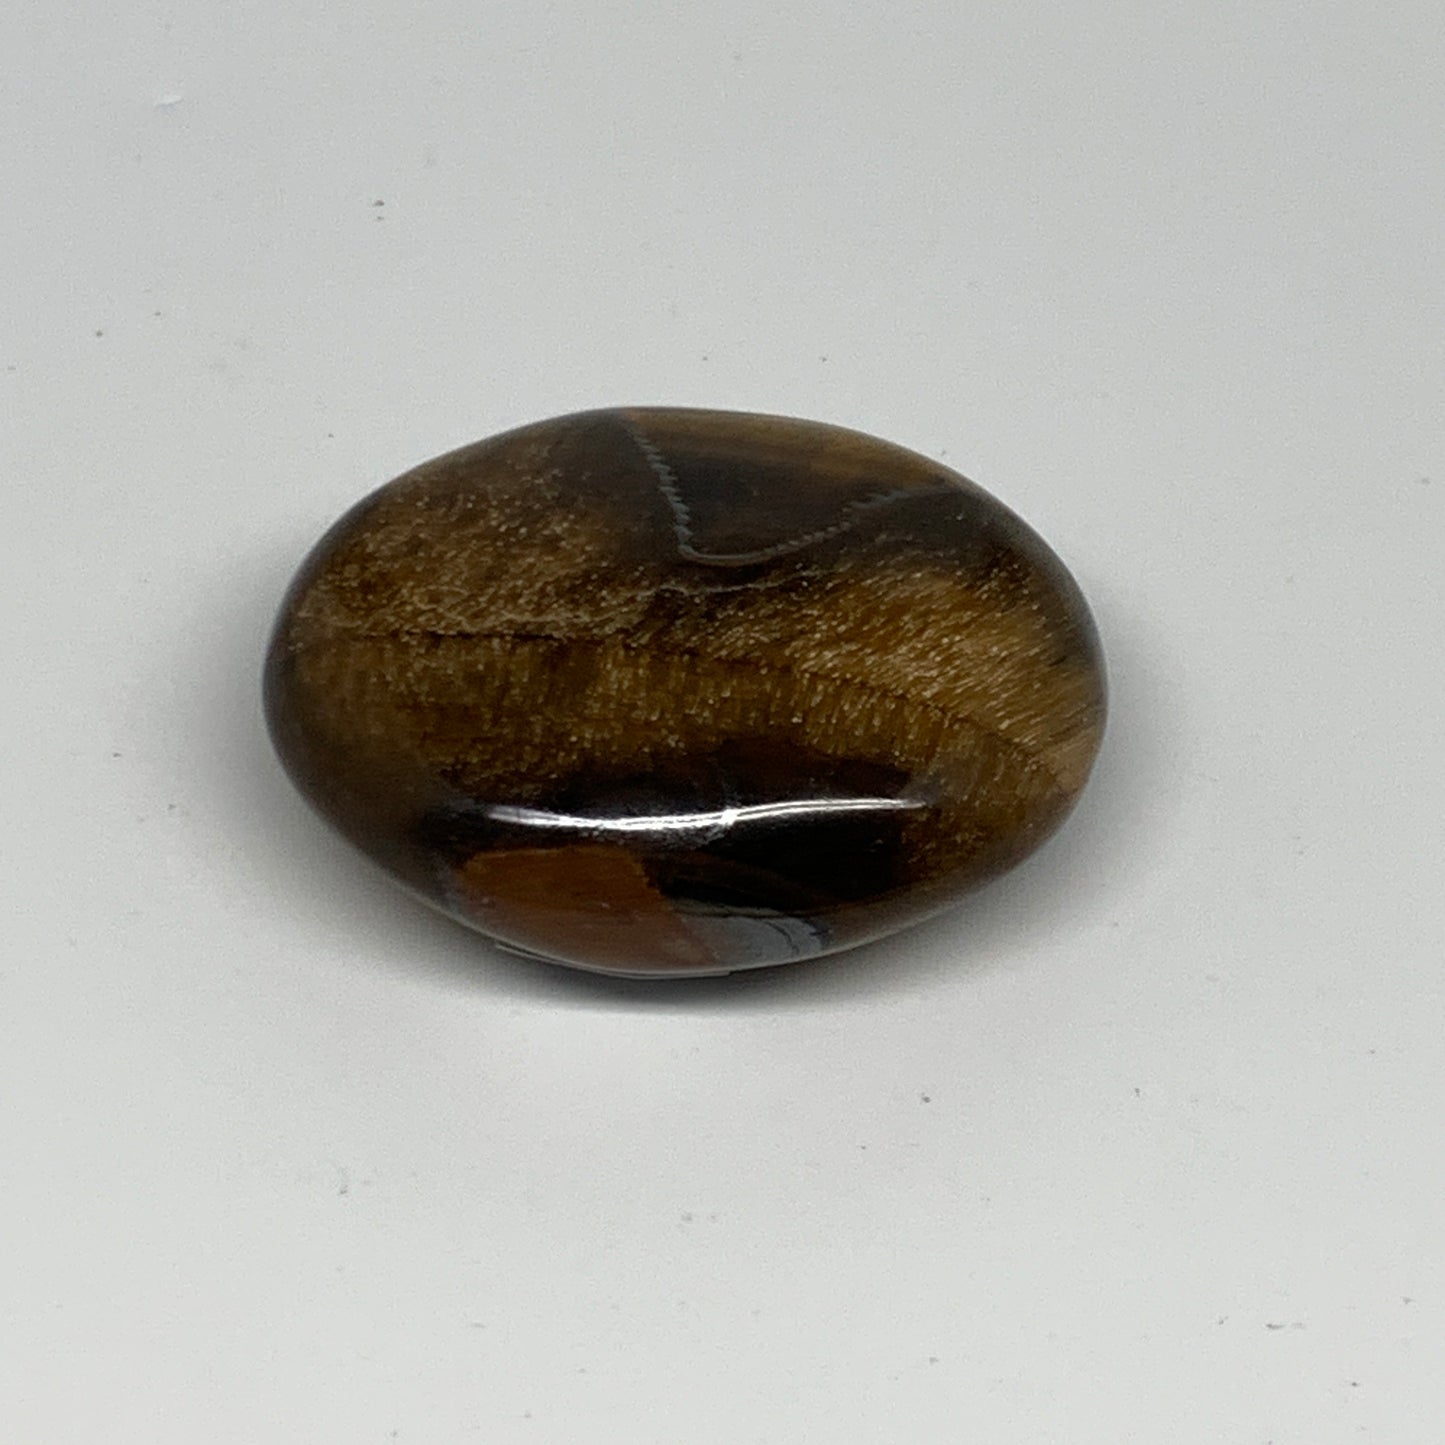 81.7g, 2.2"x1.7"x0.8", Natural Tiger's Eye Palm-Stone Gemstone @India, B27961